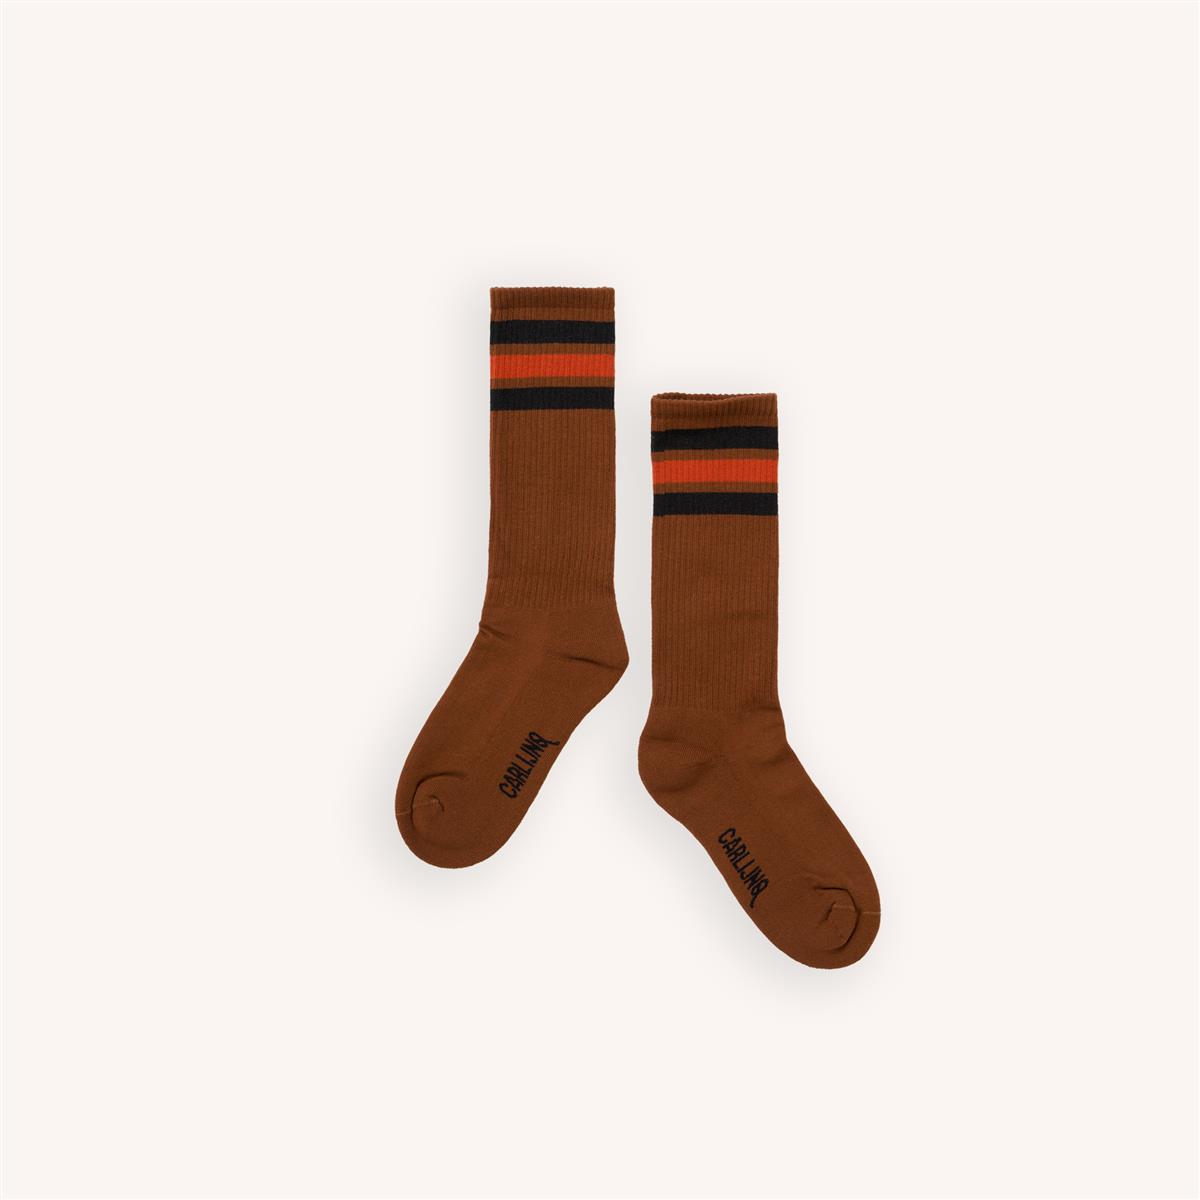 CARLIJNQ - Sport Socks - Brown Black